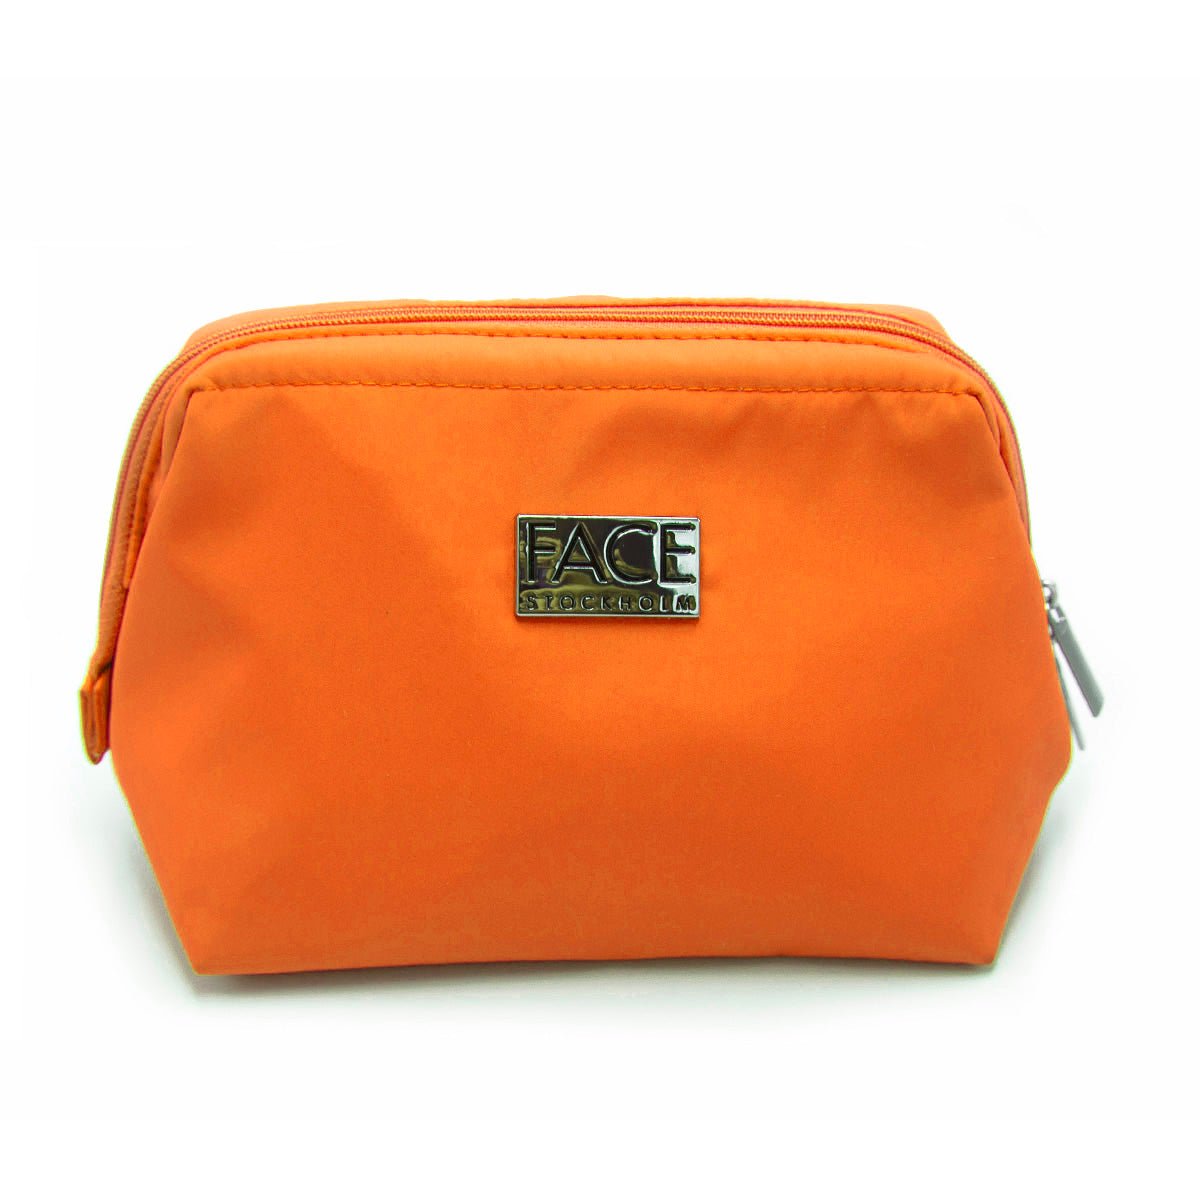 1200x1200 Orange Bag